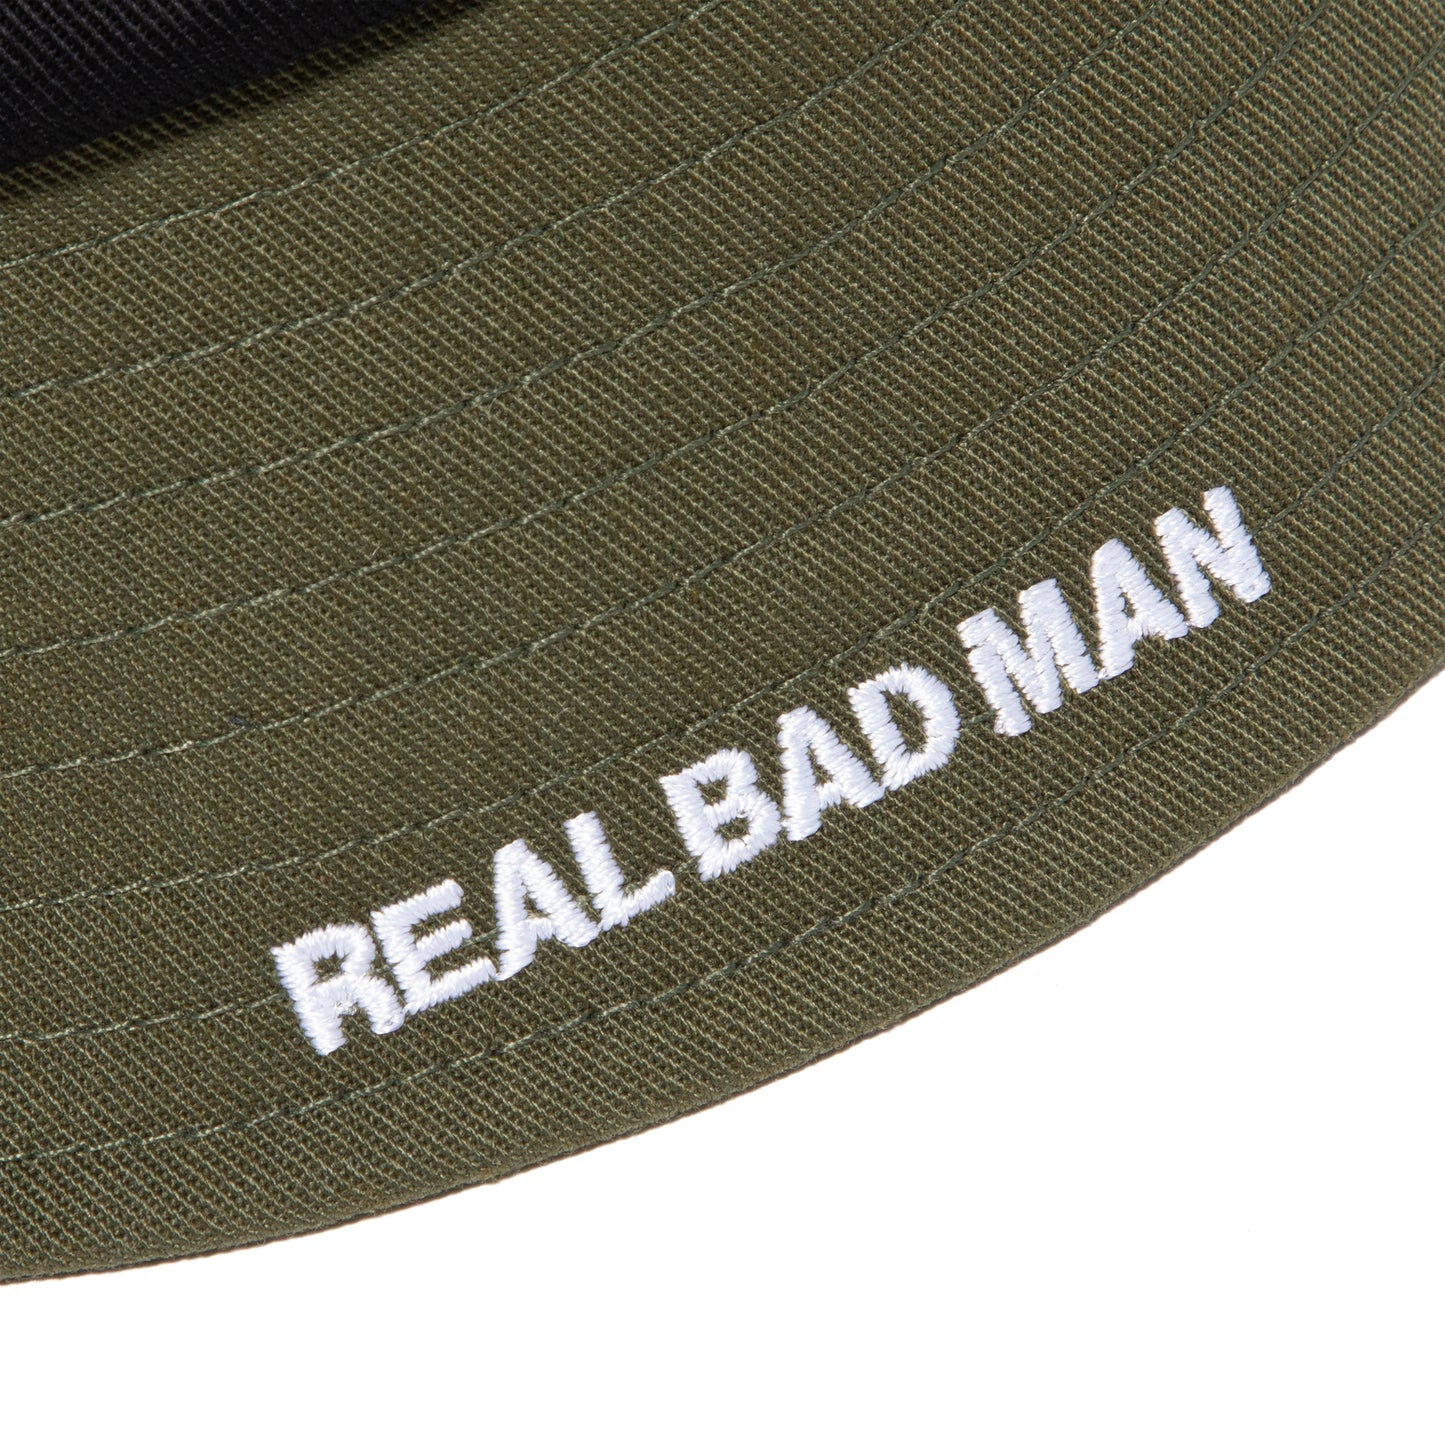 Real Bad Man Three Way Patch Fisherman (Black/Army)